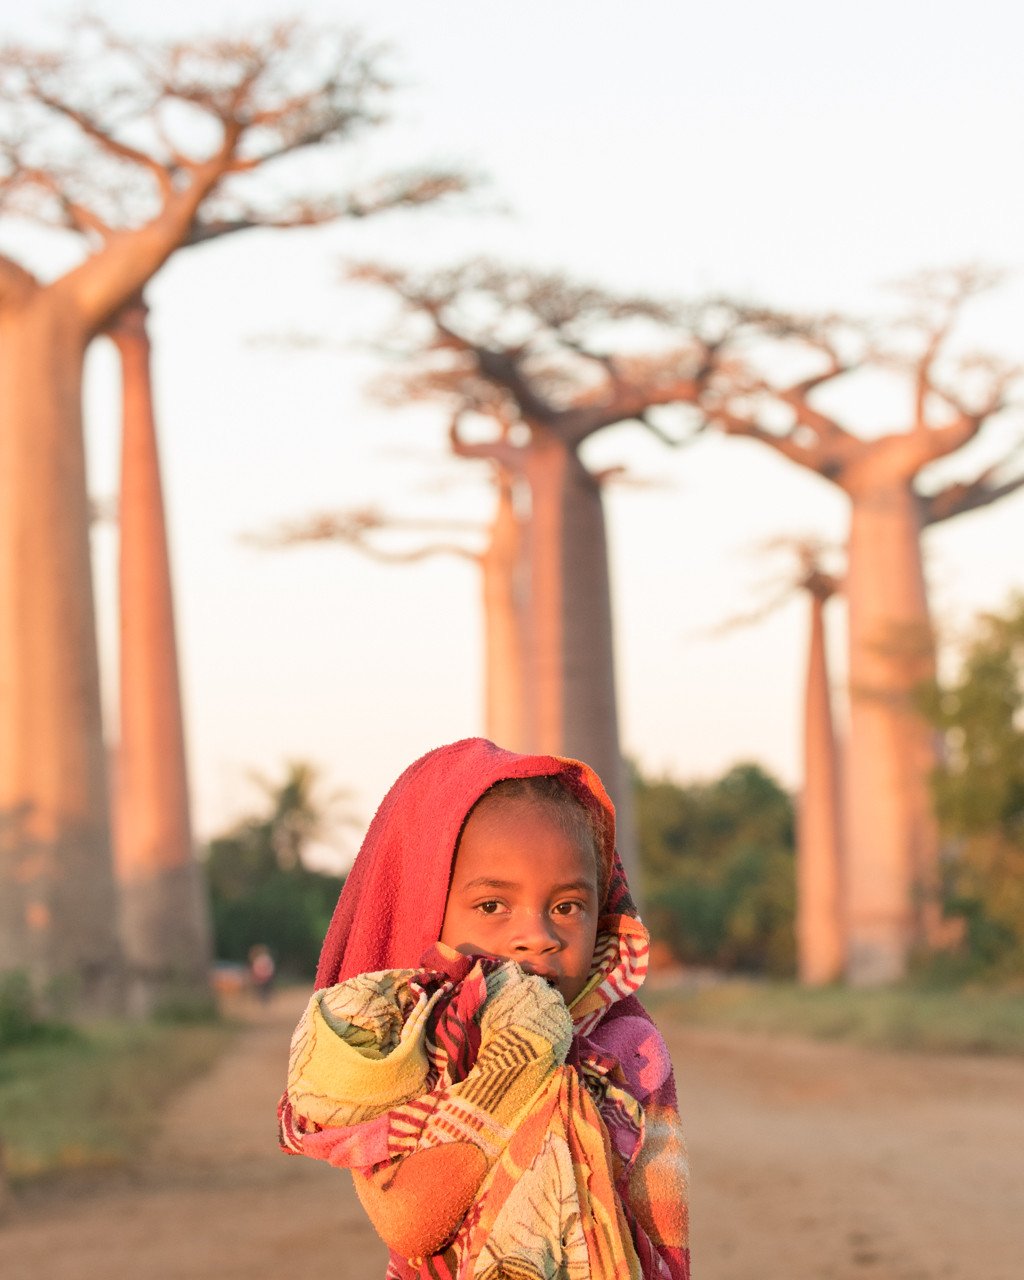 Baobabs Alley - Rondreis Madagascar